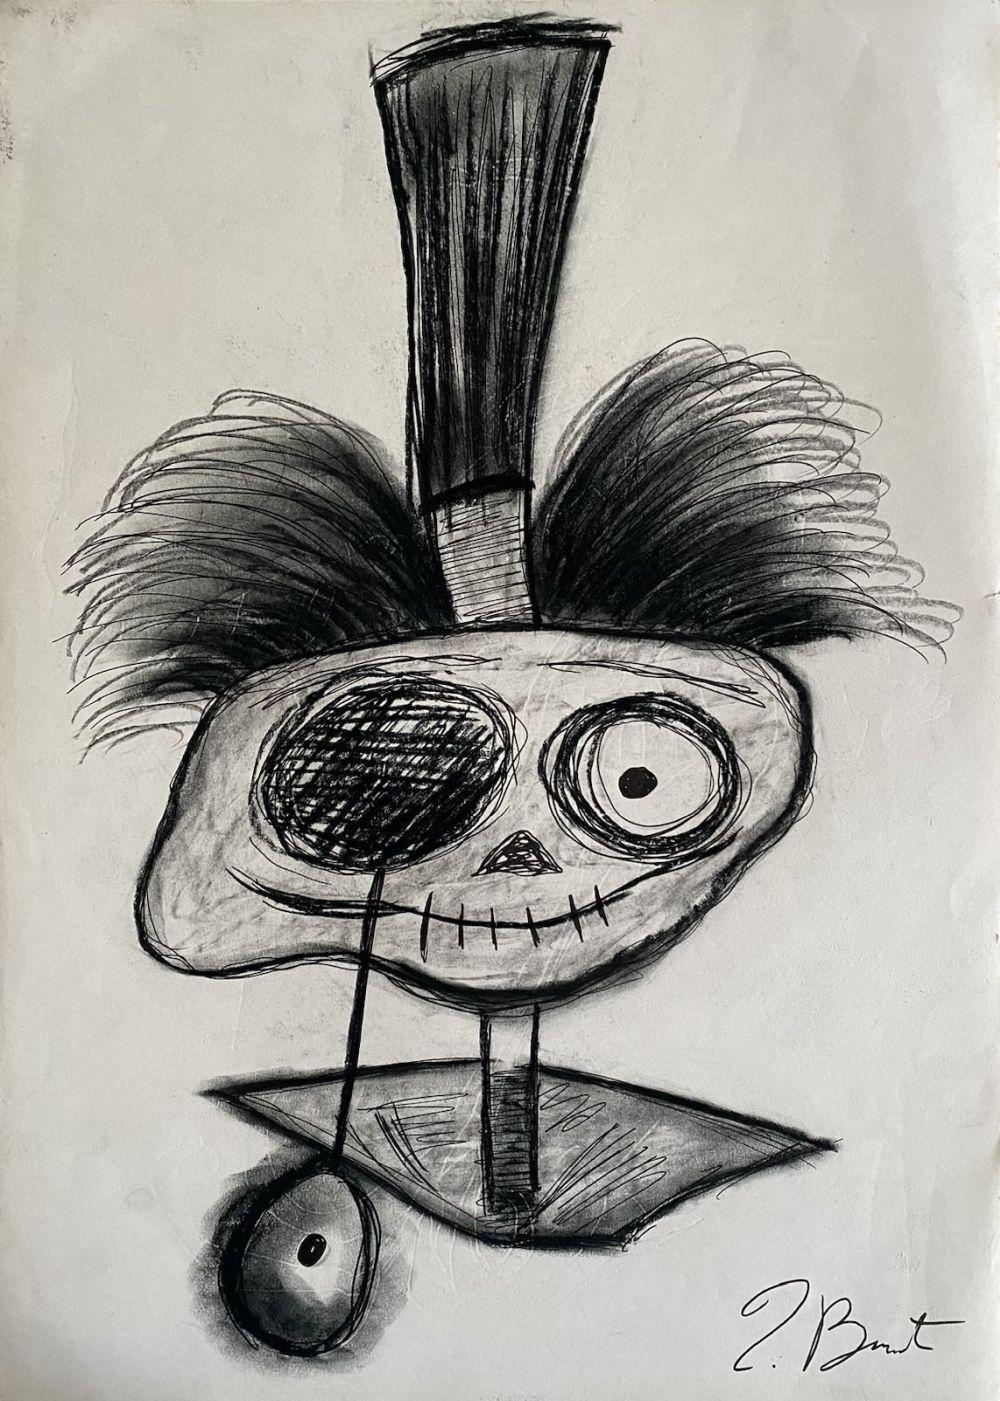 Tim Burton, Tim Burton (after) - Untitled Drawing on paper